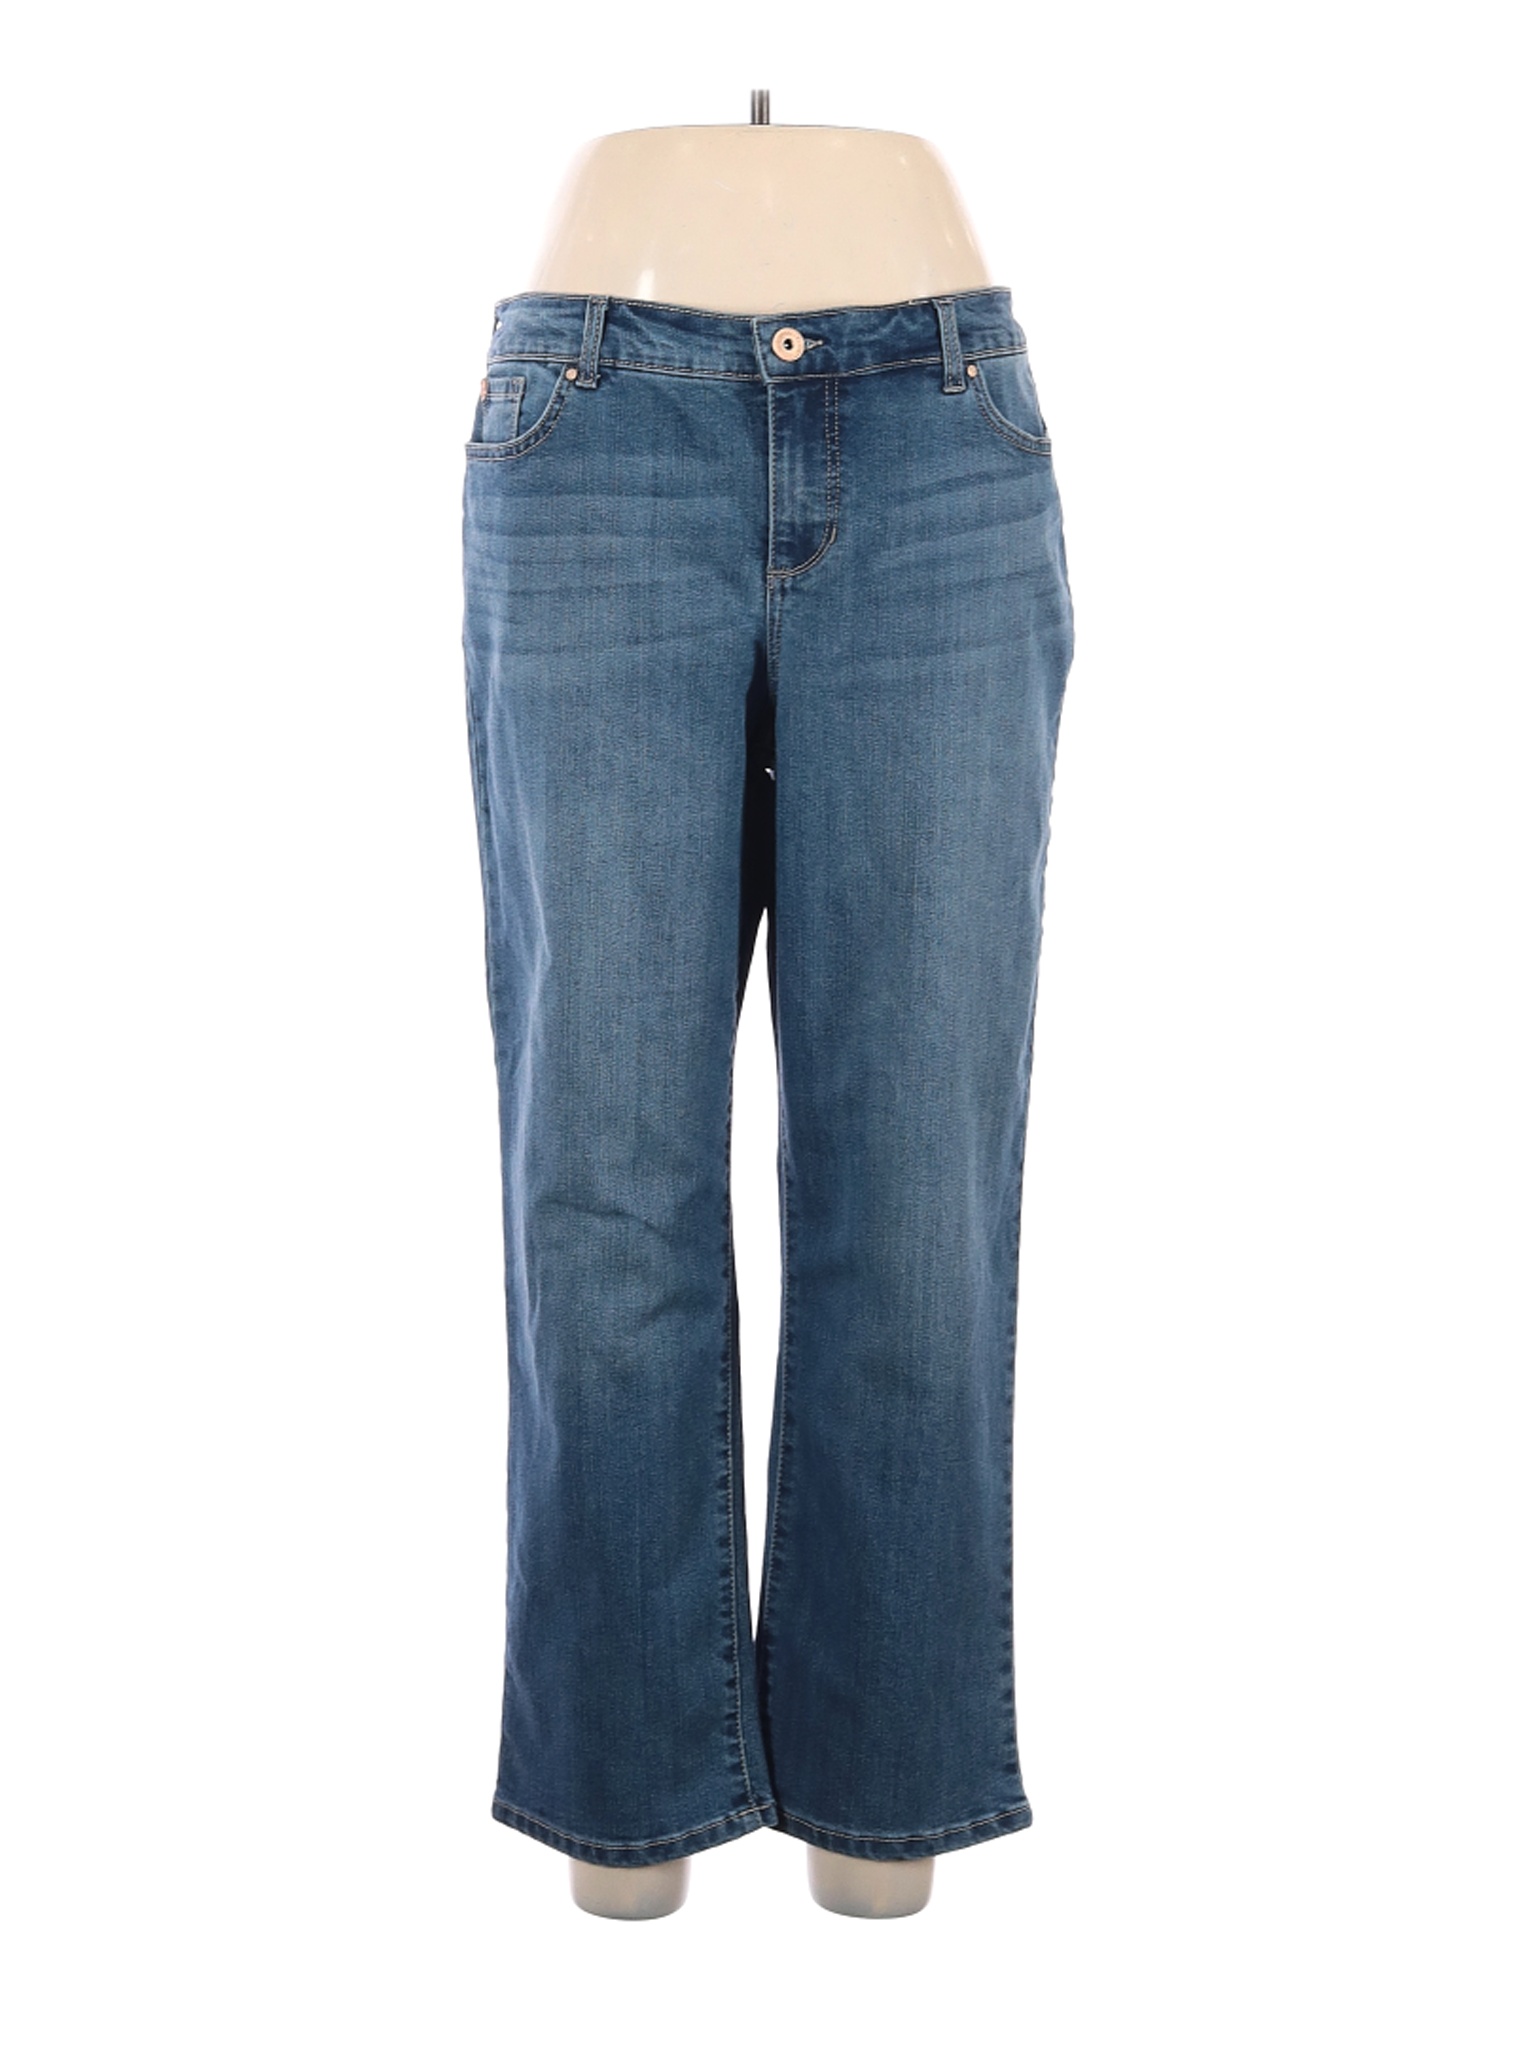 Bandolino Women Blue Jeans 12 Petites | eBay